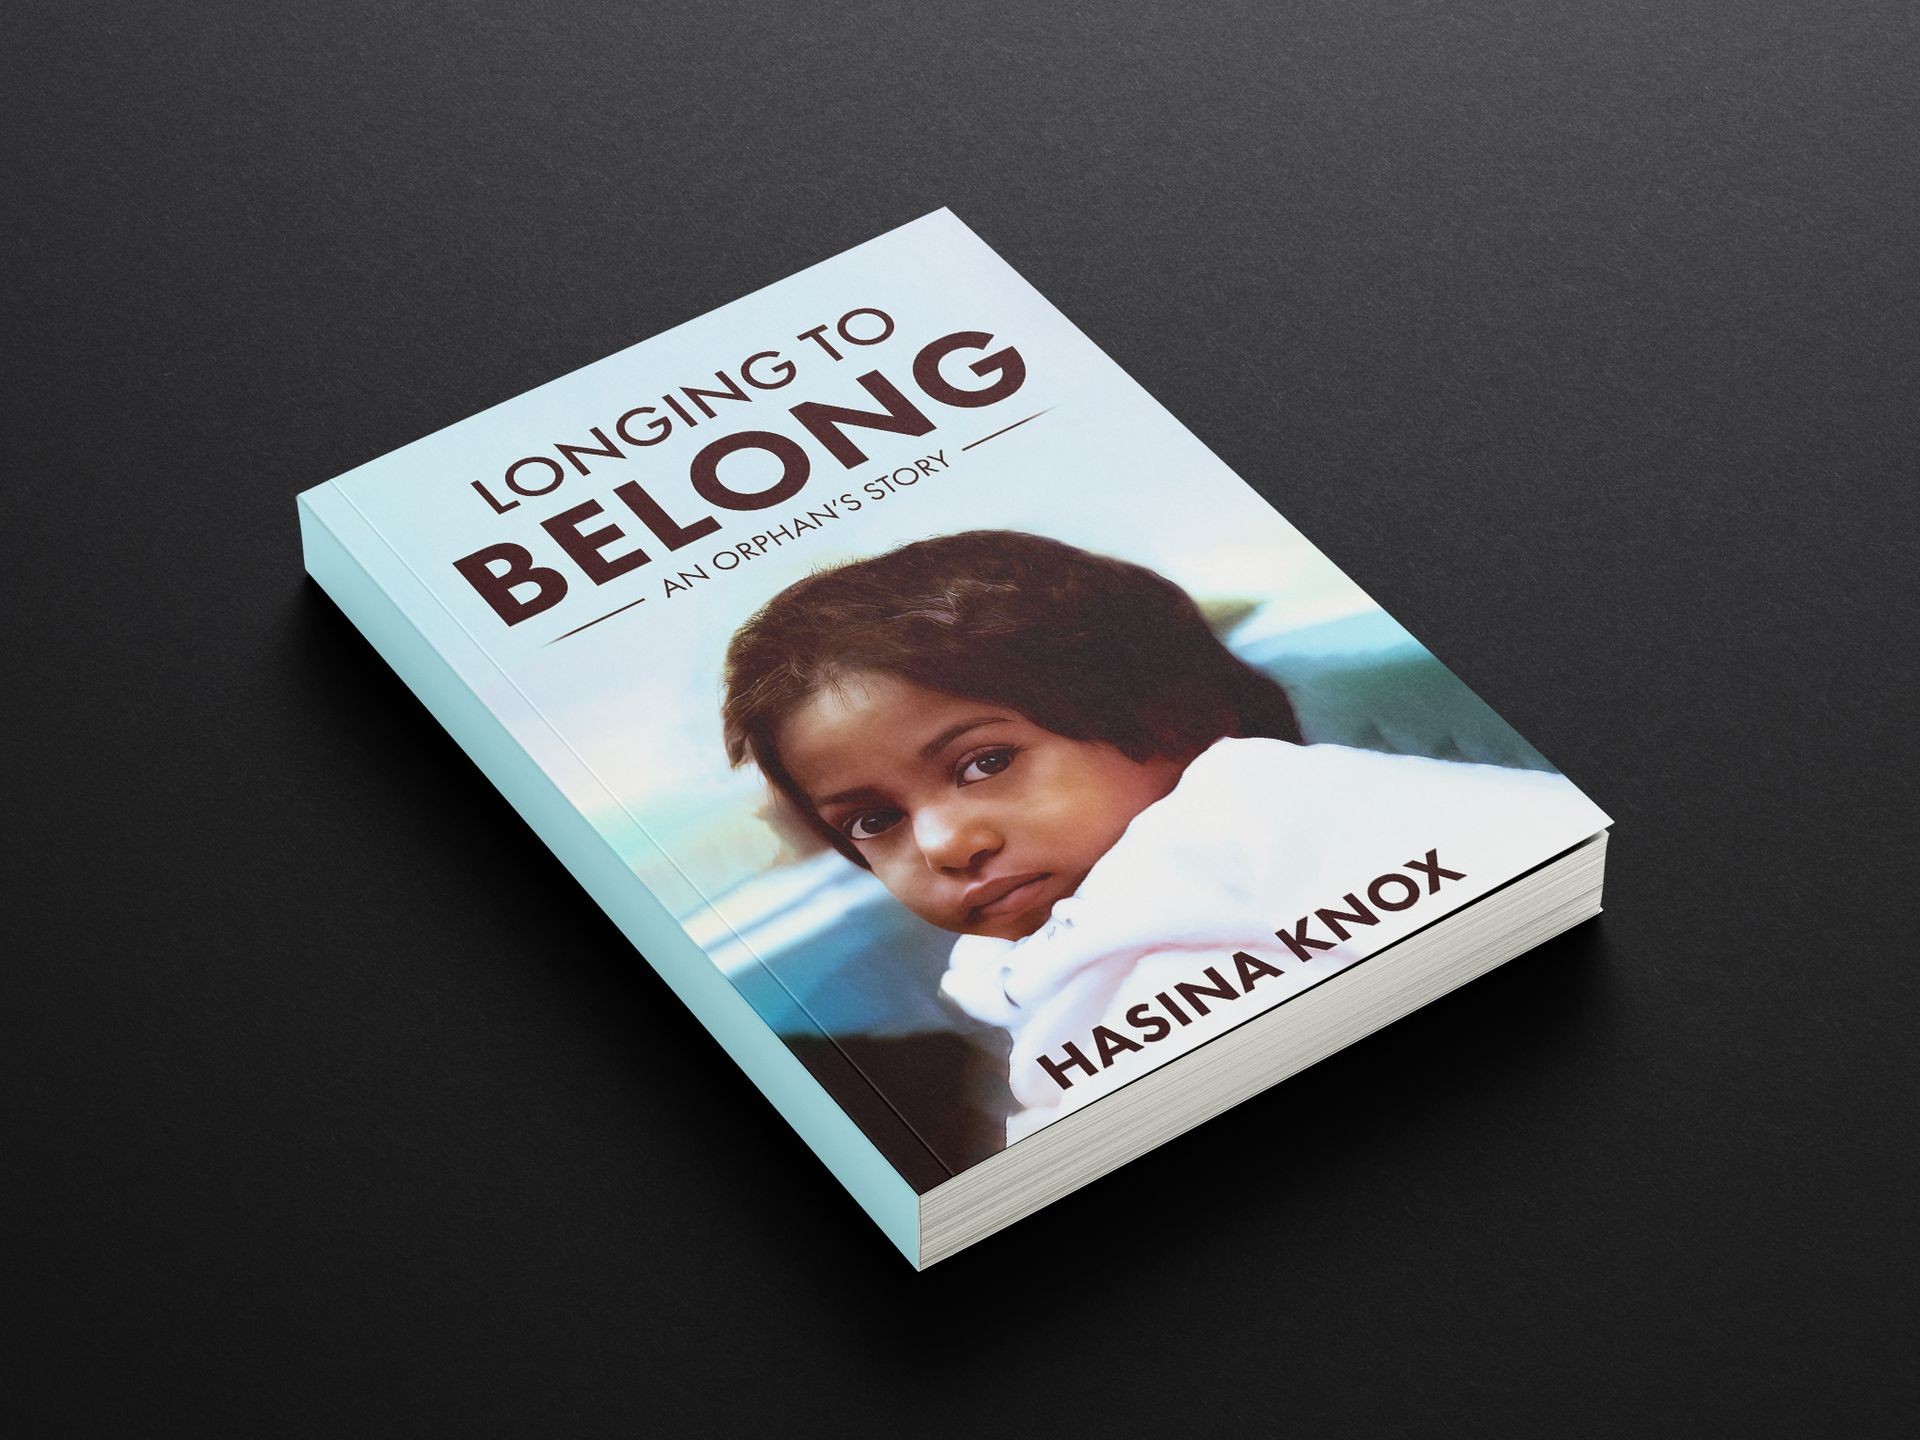 Longing to belong autobiography book